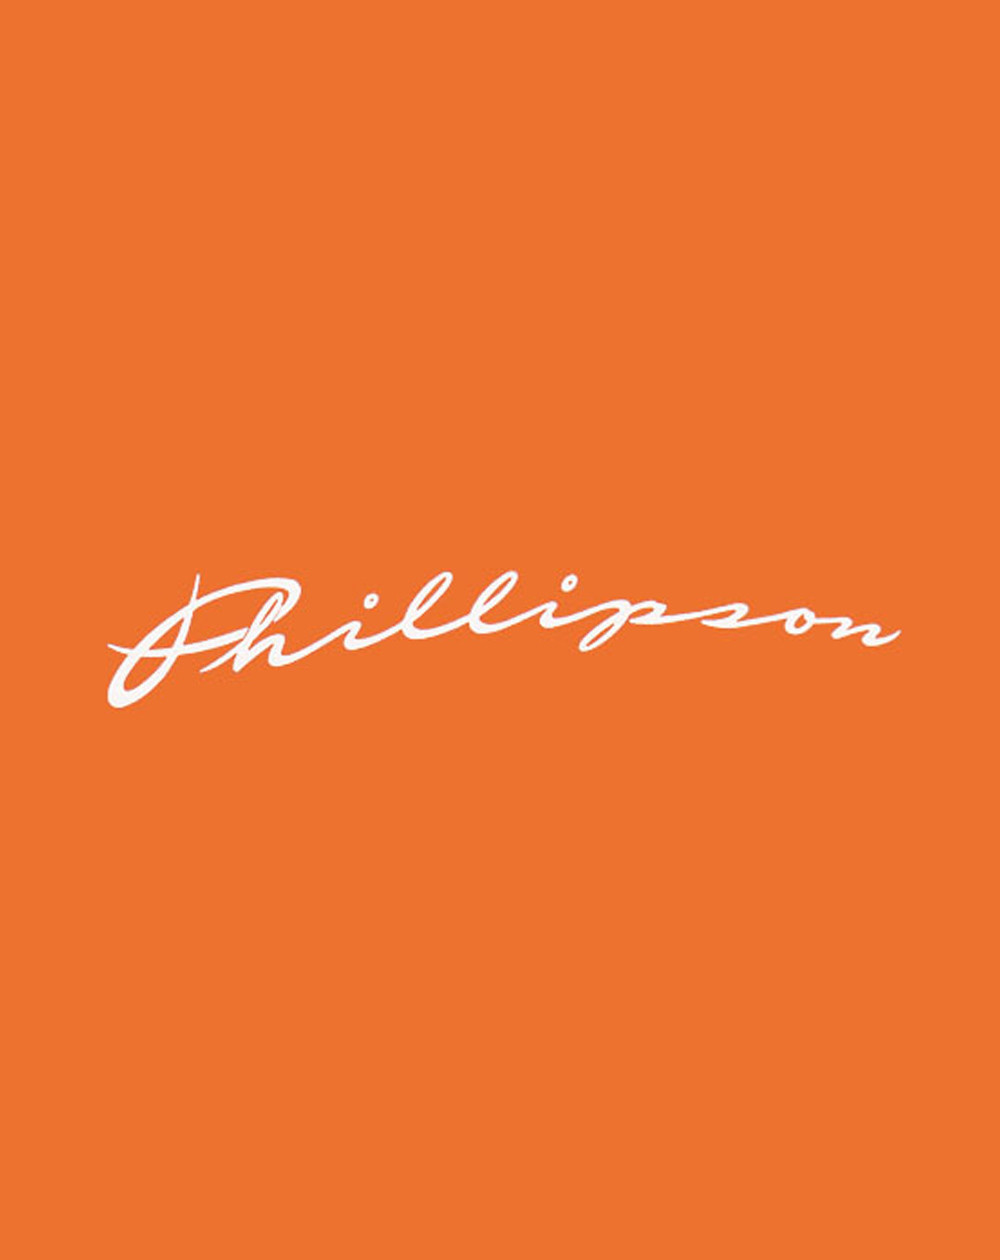 Phillipson Rod Company